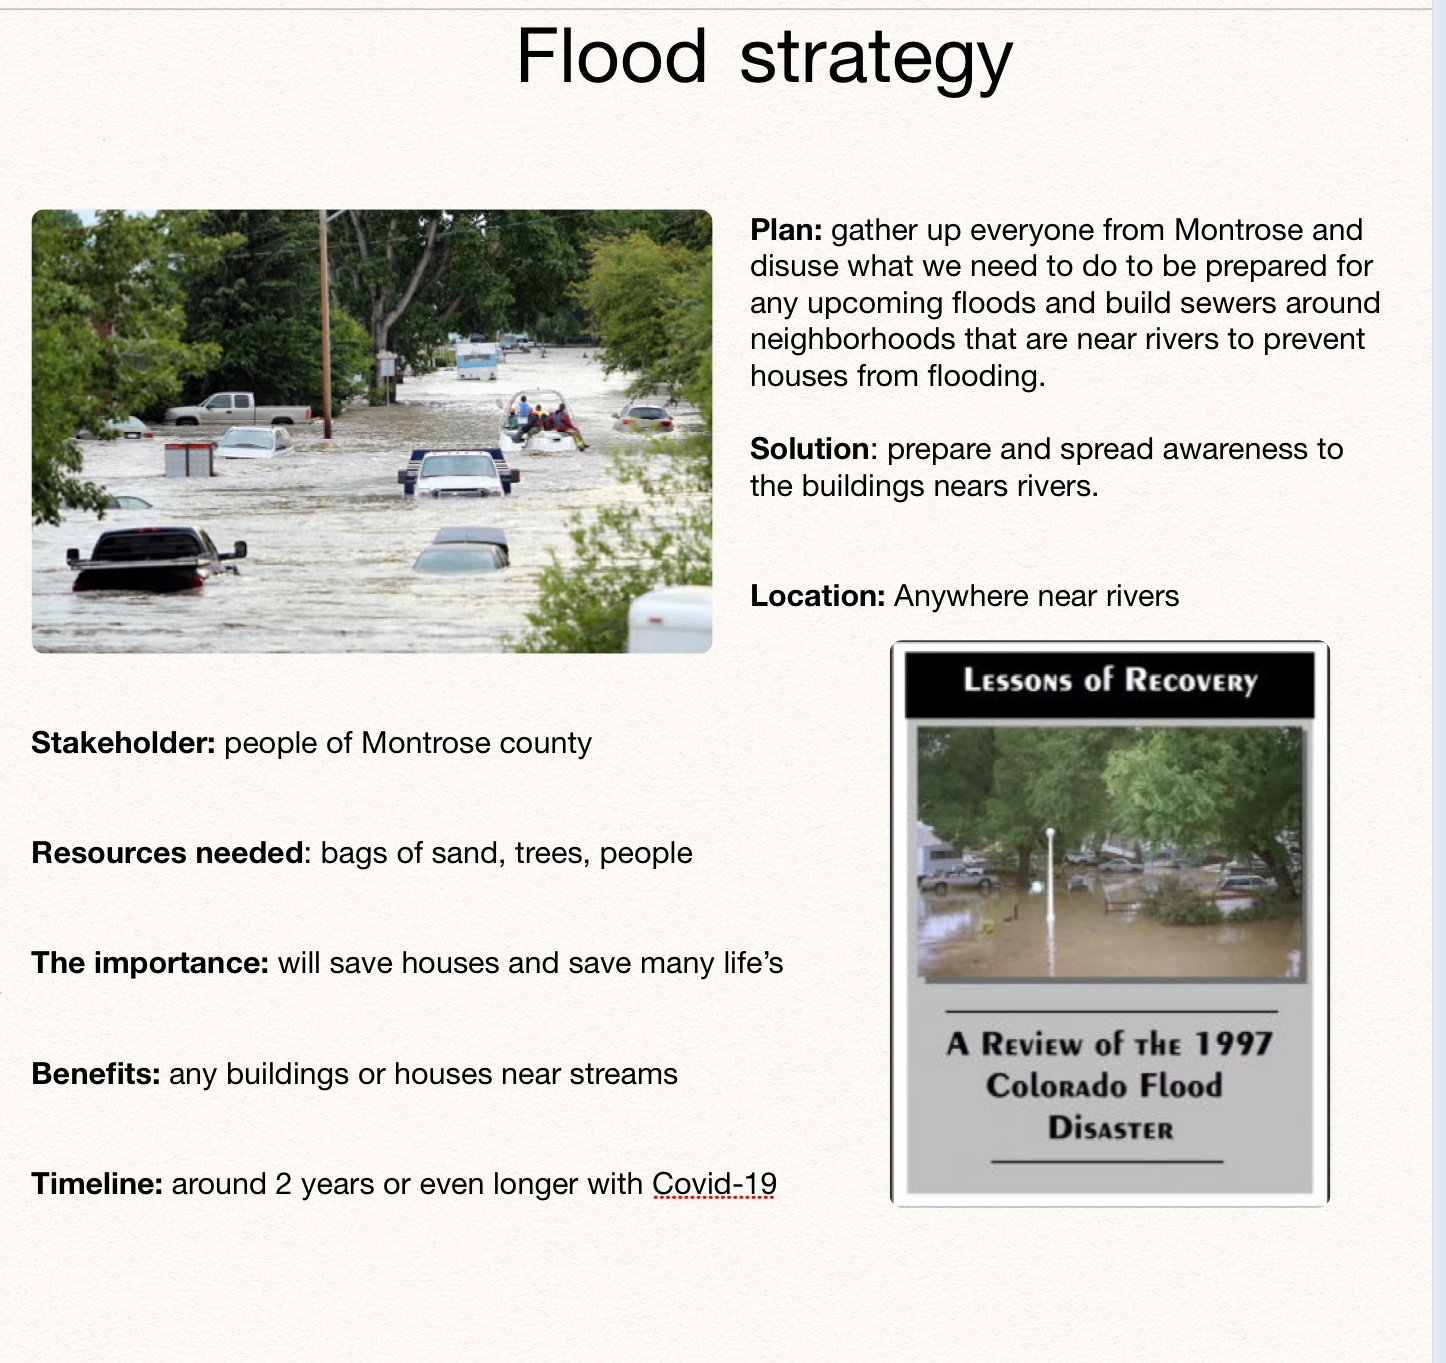 Flood Strategy description and flood images of Colorado roads 